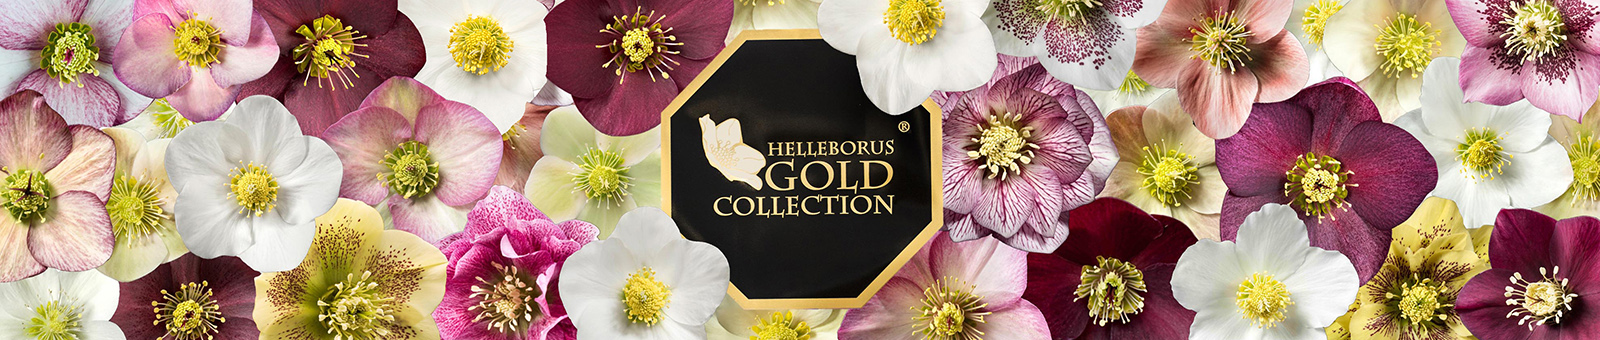 Helleborus Gold Collection®